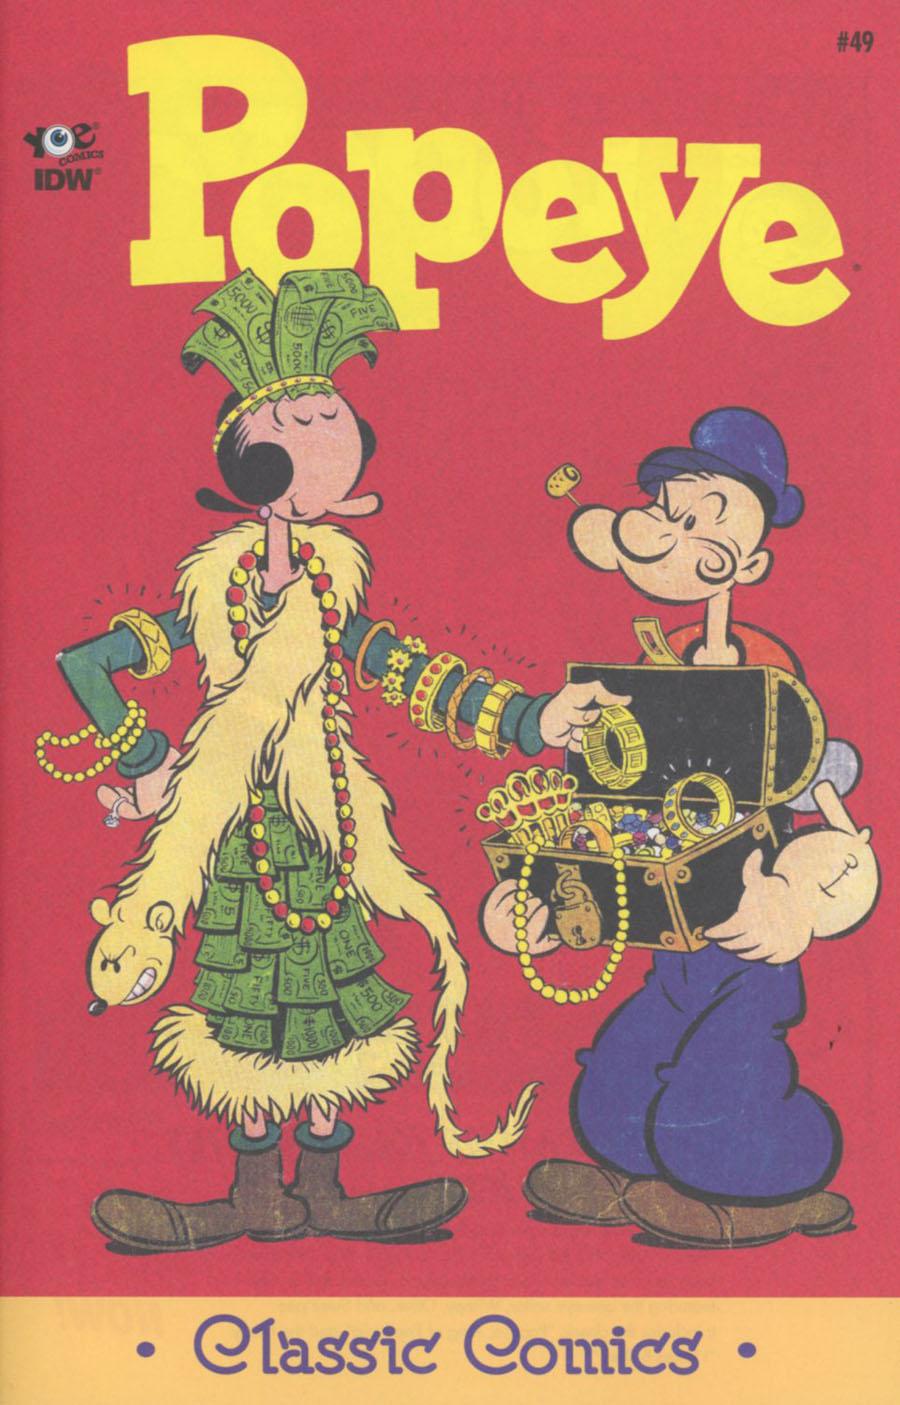 Classic Popeye Vol. 1 #49